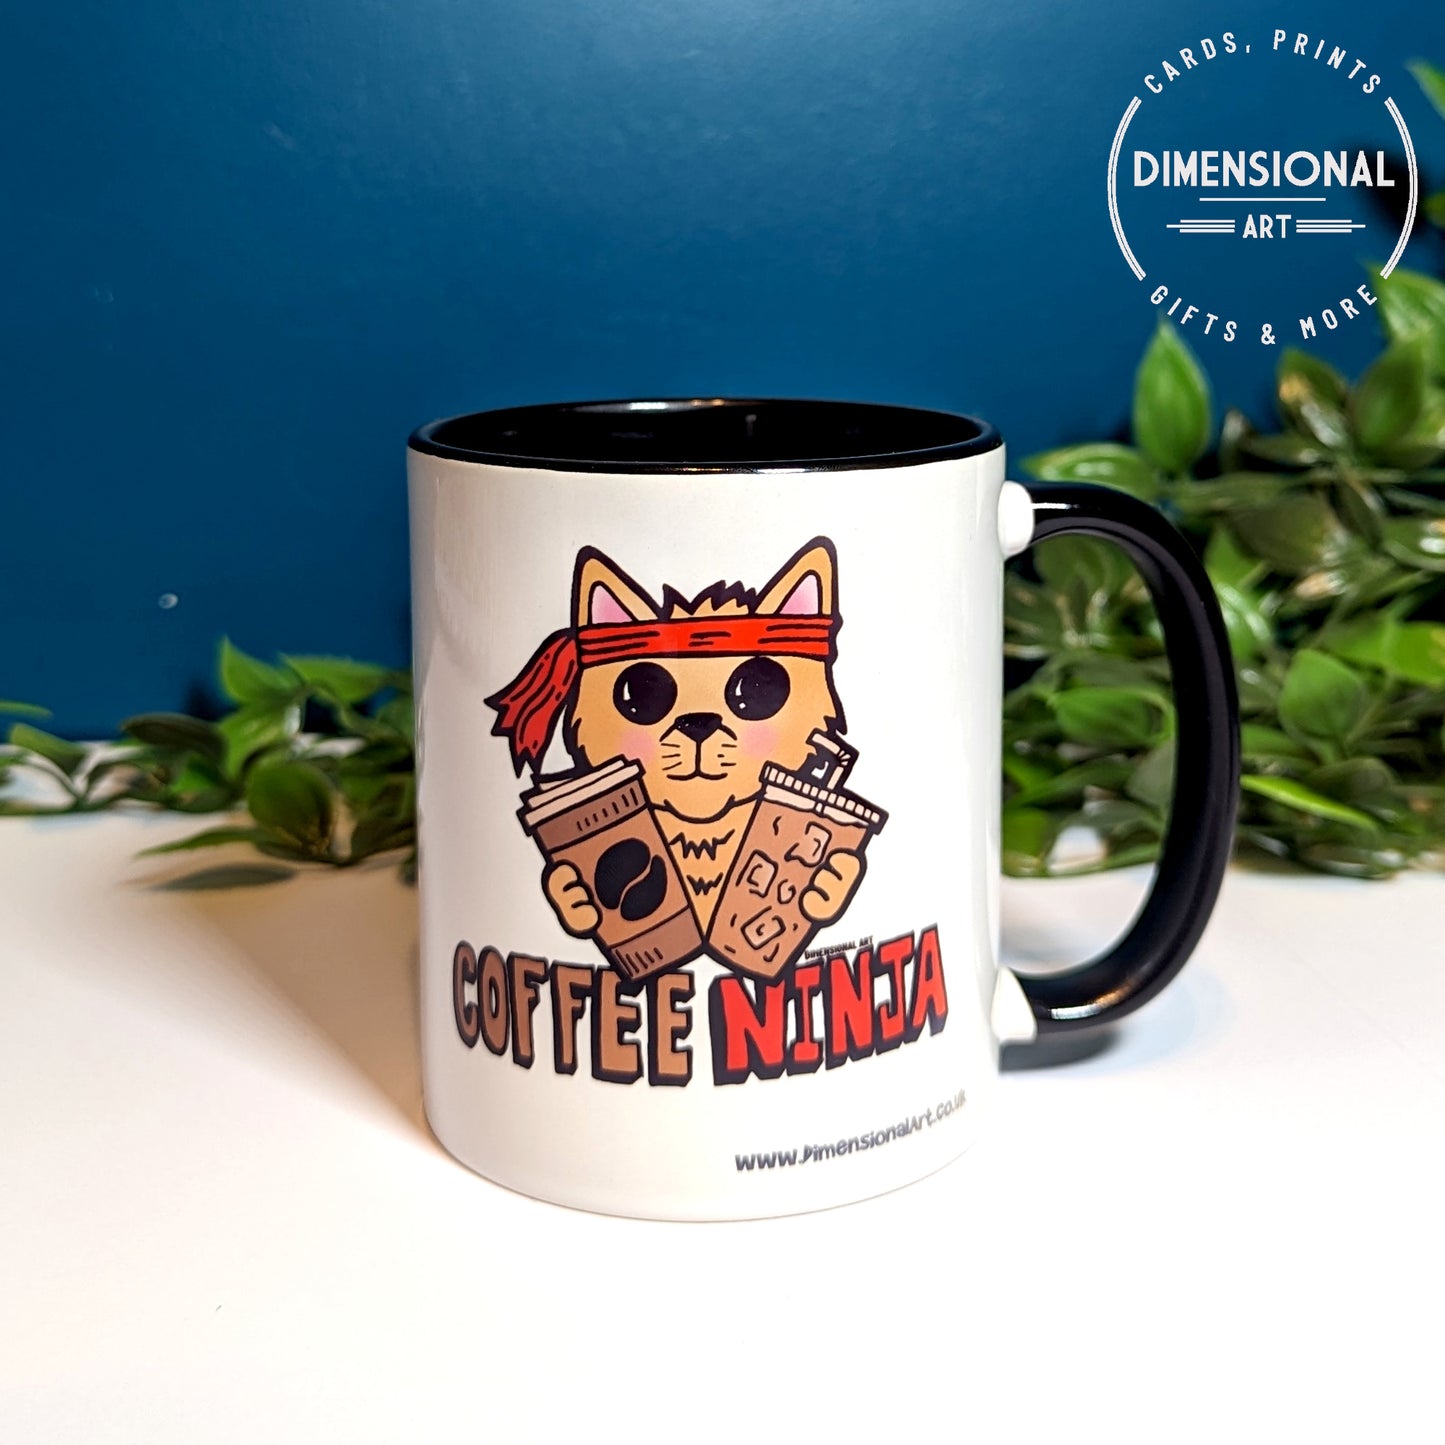 Coffee Ninja Cat Mug